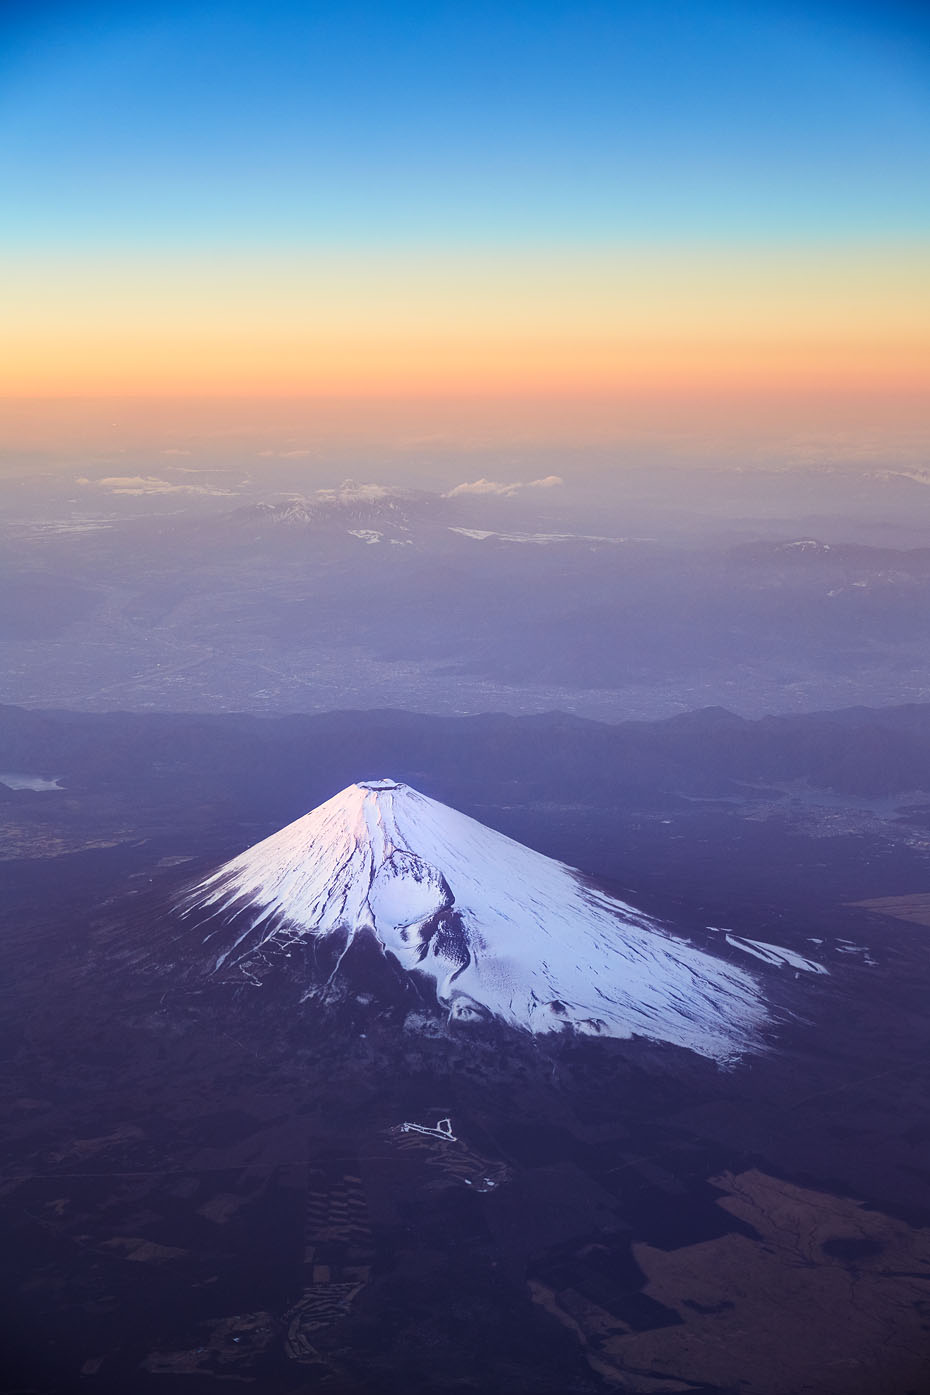 Eternal Mount Fuji